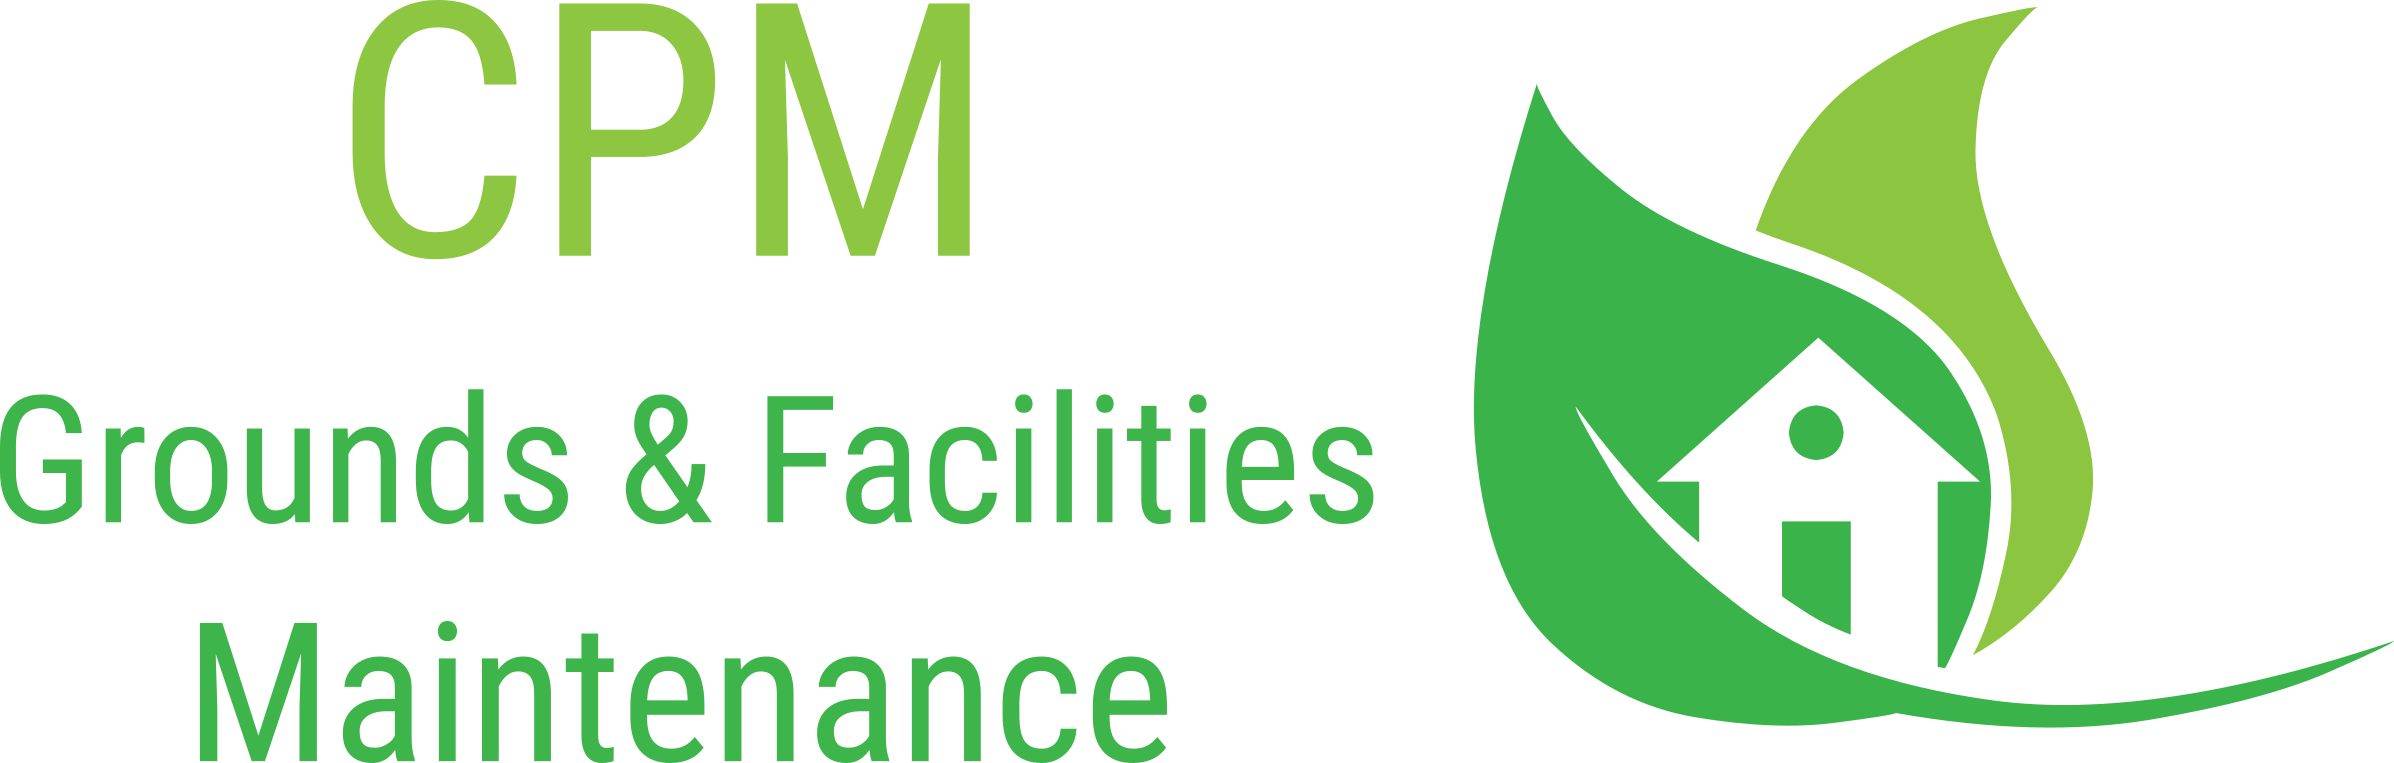 CPM Grounds maintenance & Facilities